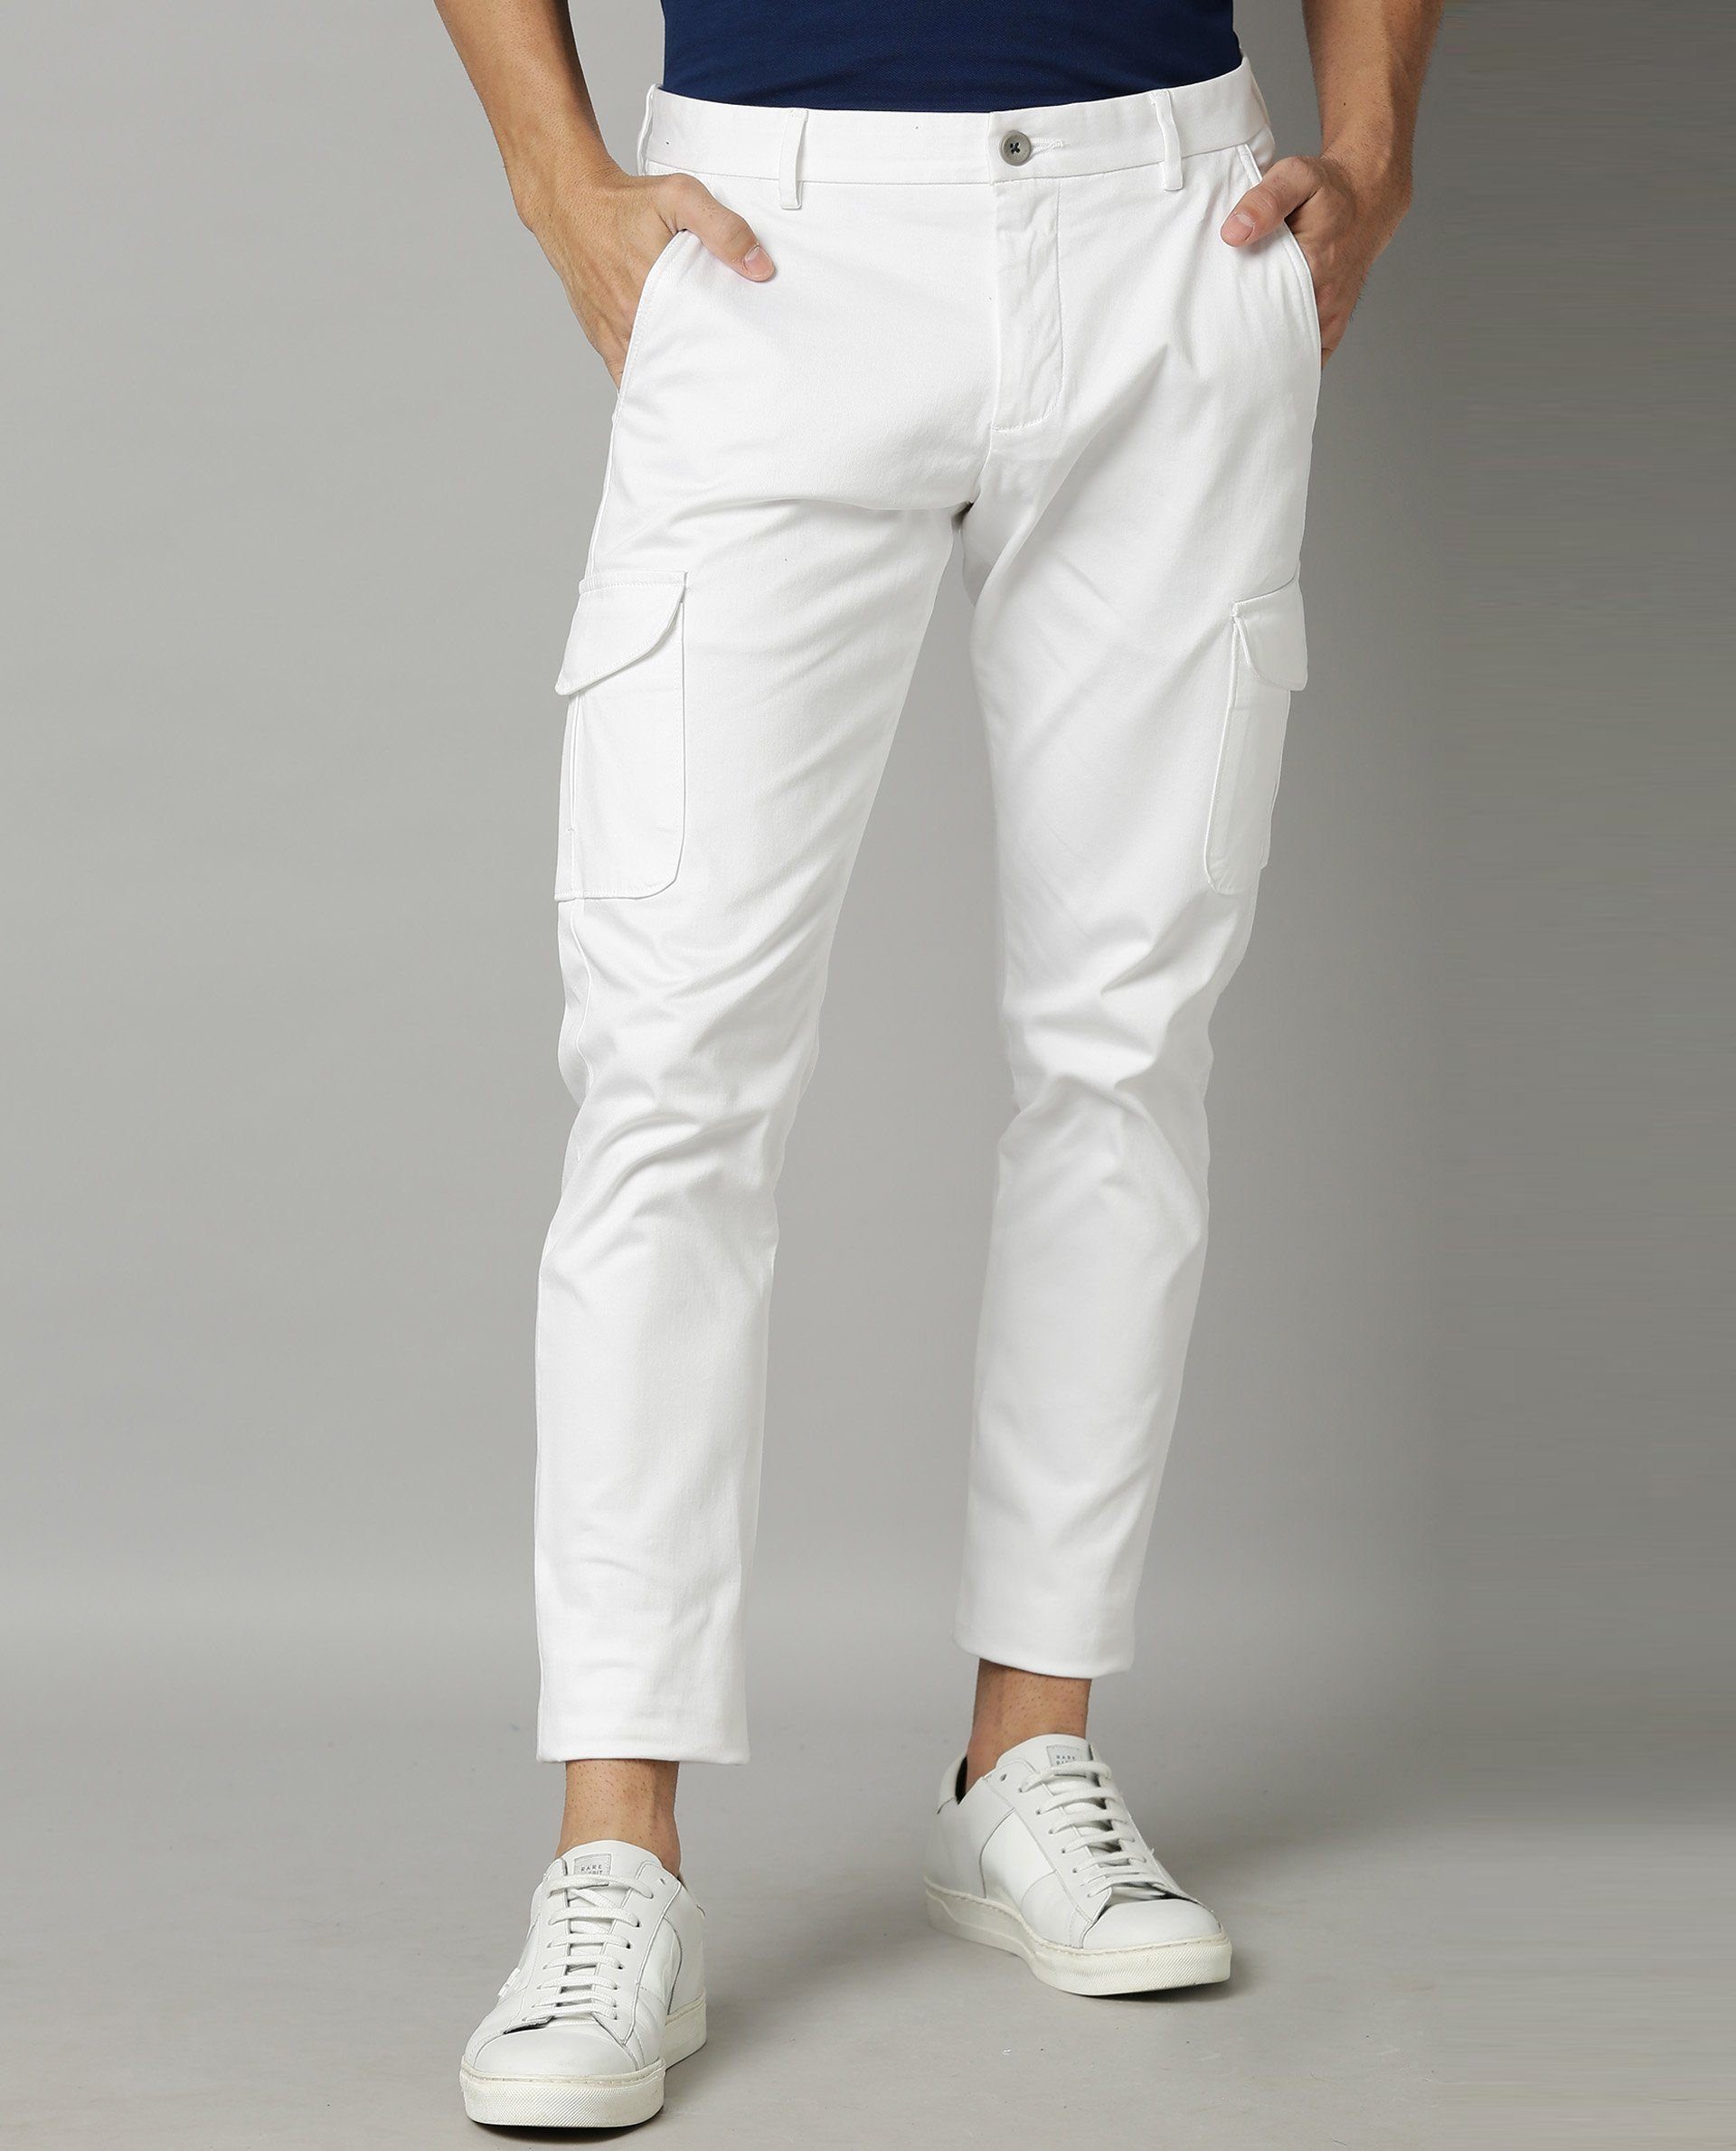 Jennifer Aniston's White Cargo Pants | POPSUGAR Fashion